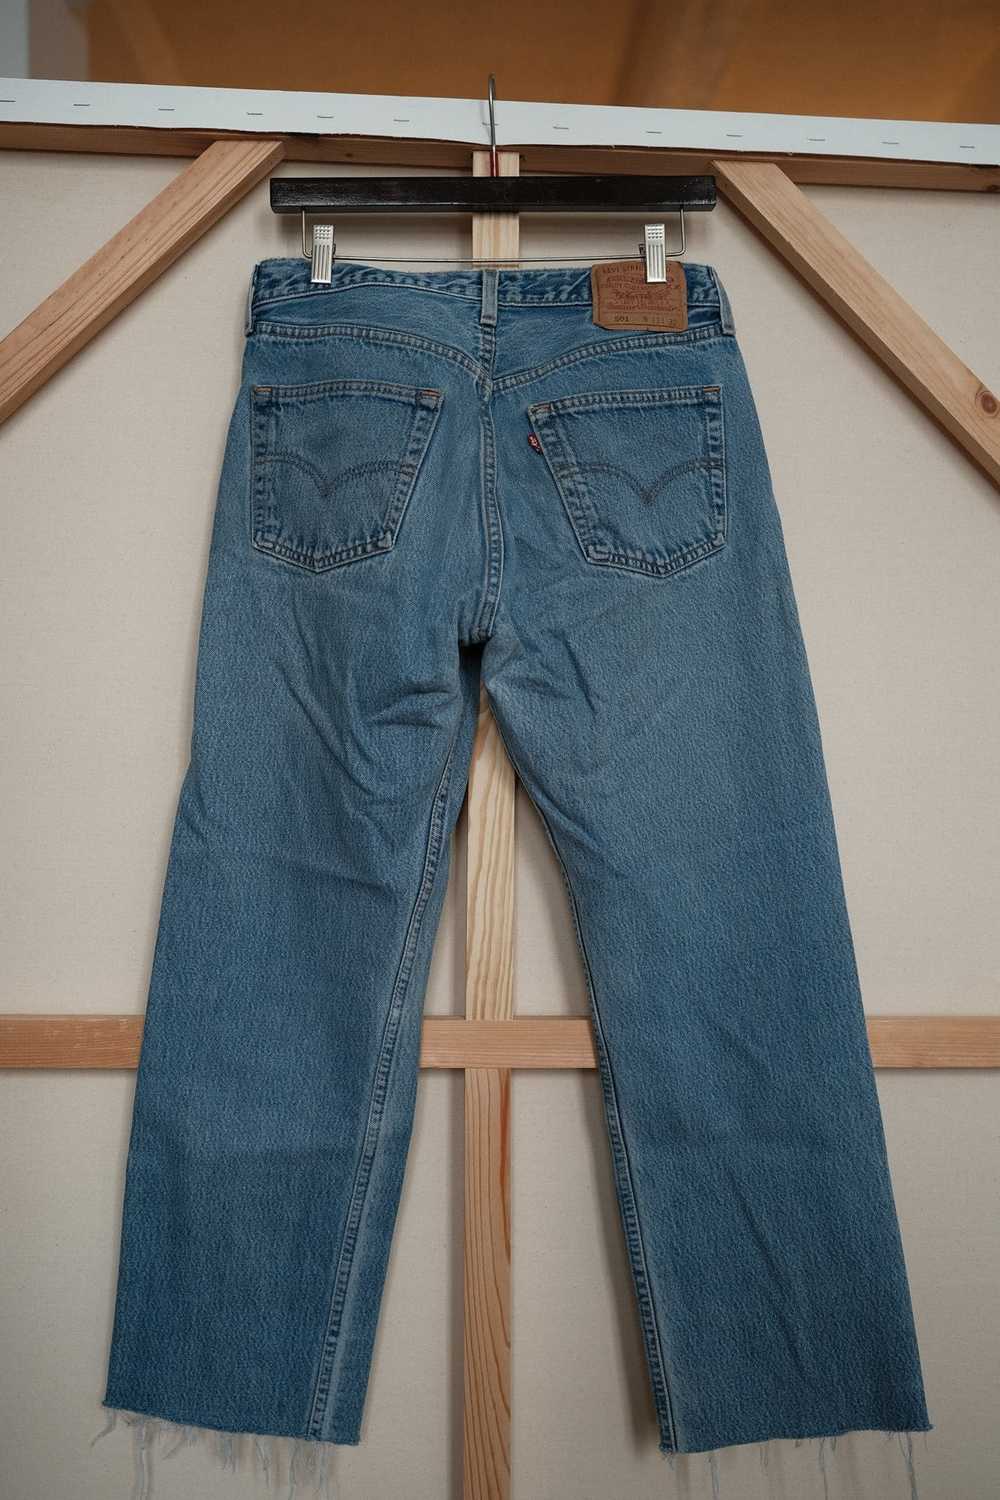 Levi's Modified 501 Jeans - image 5